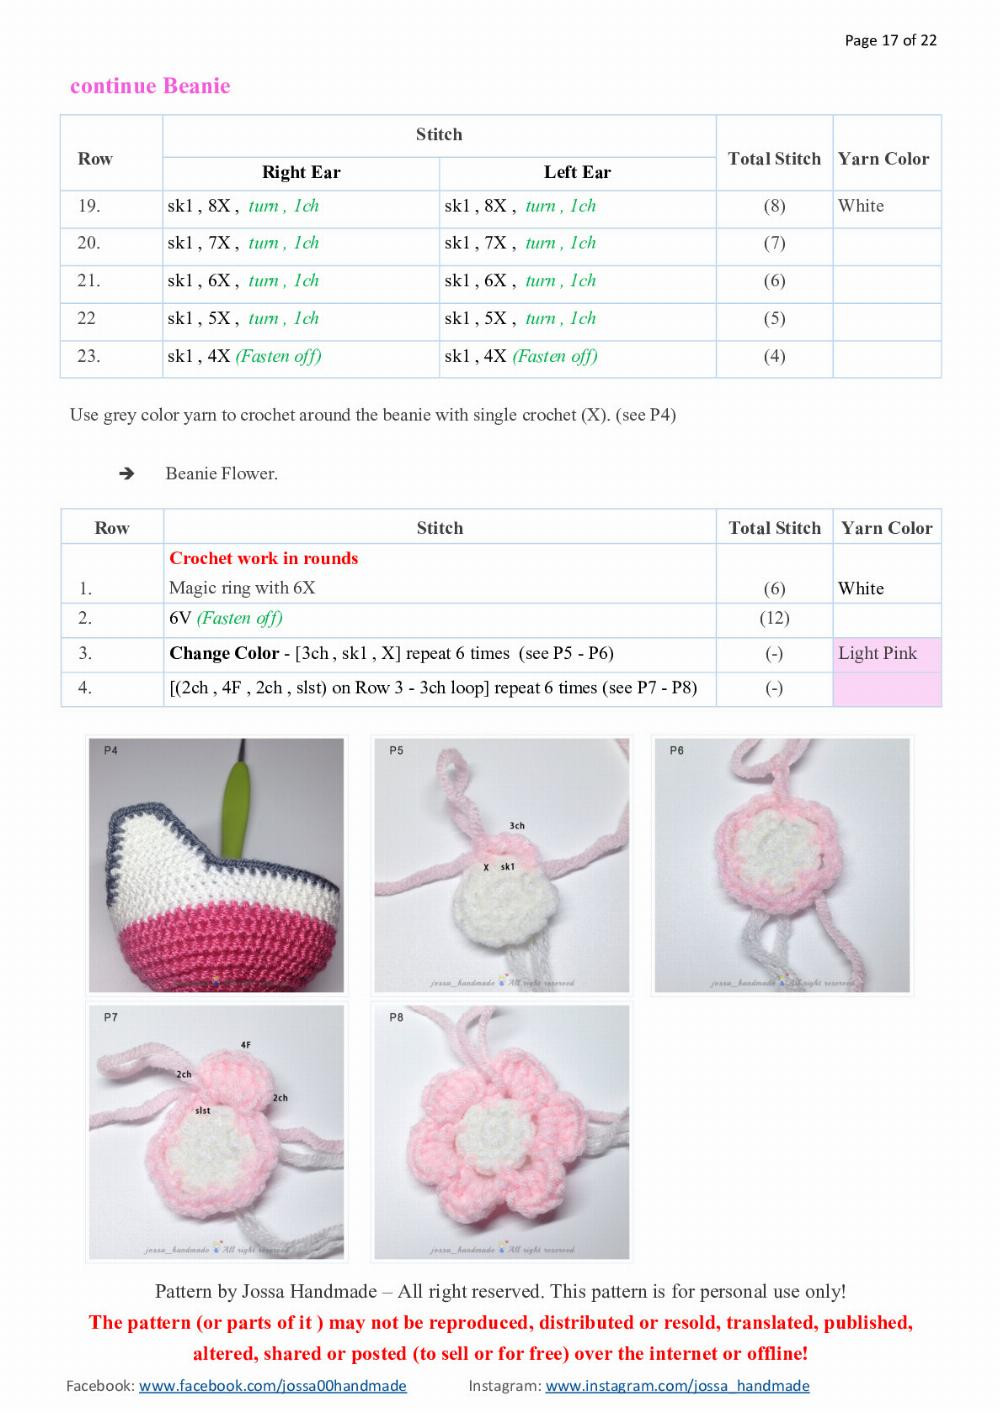 chloe go holiday crochet pattern